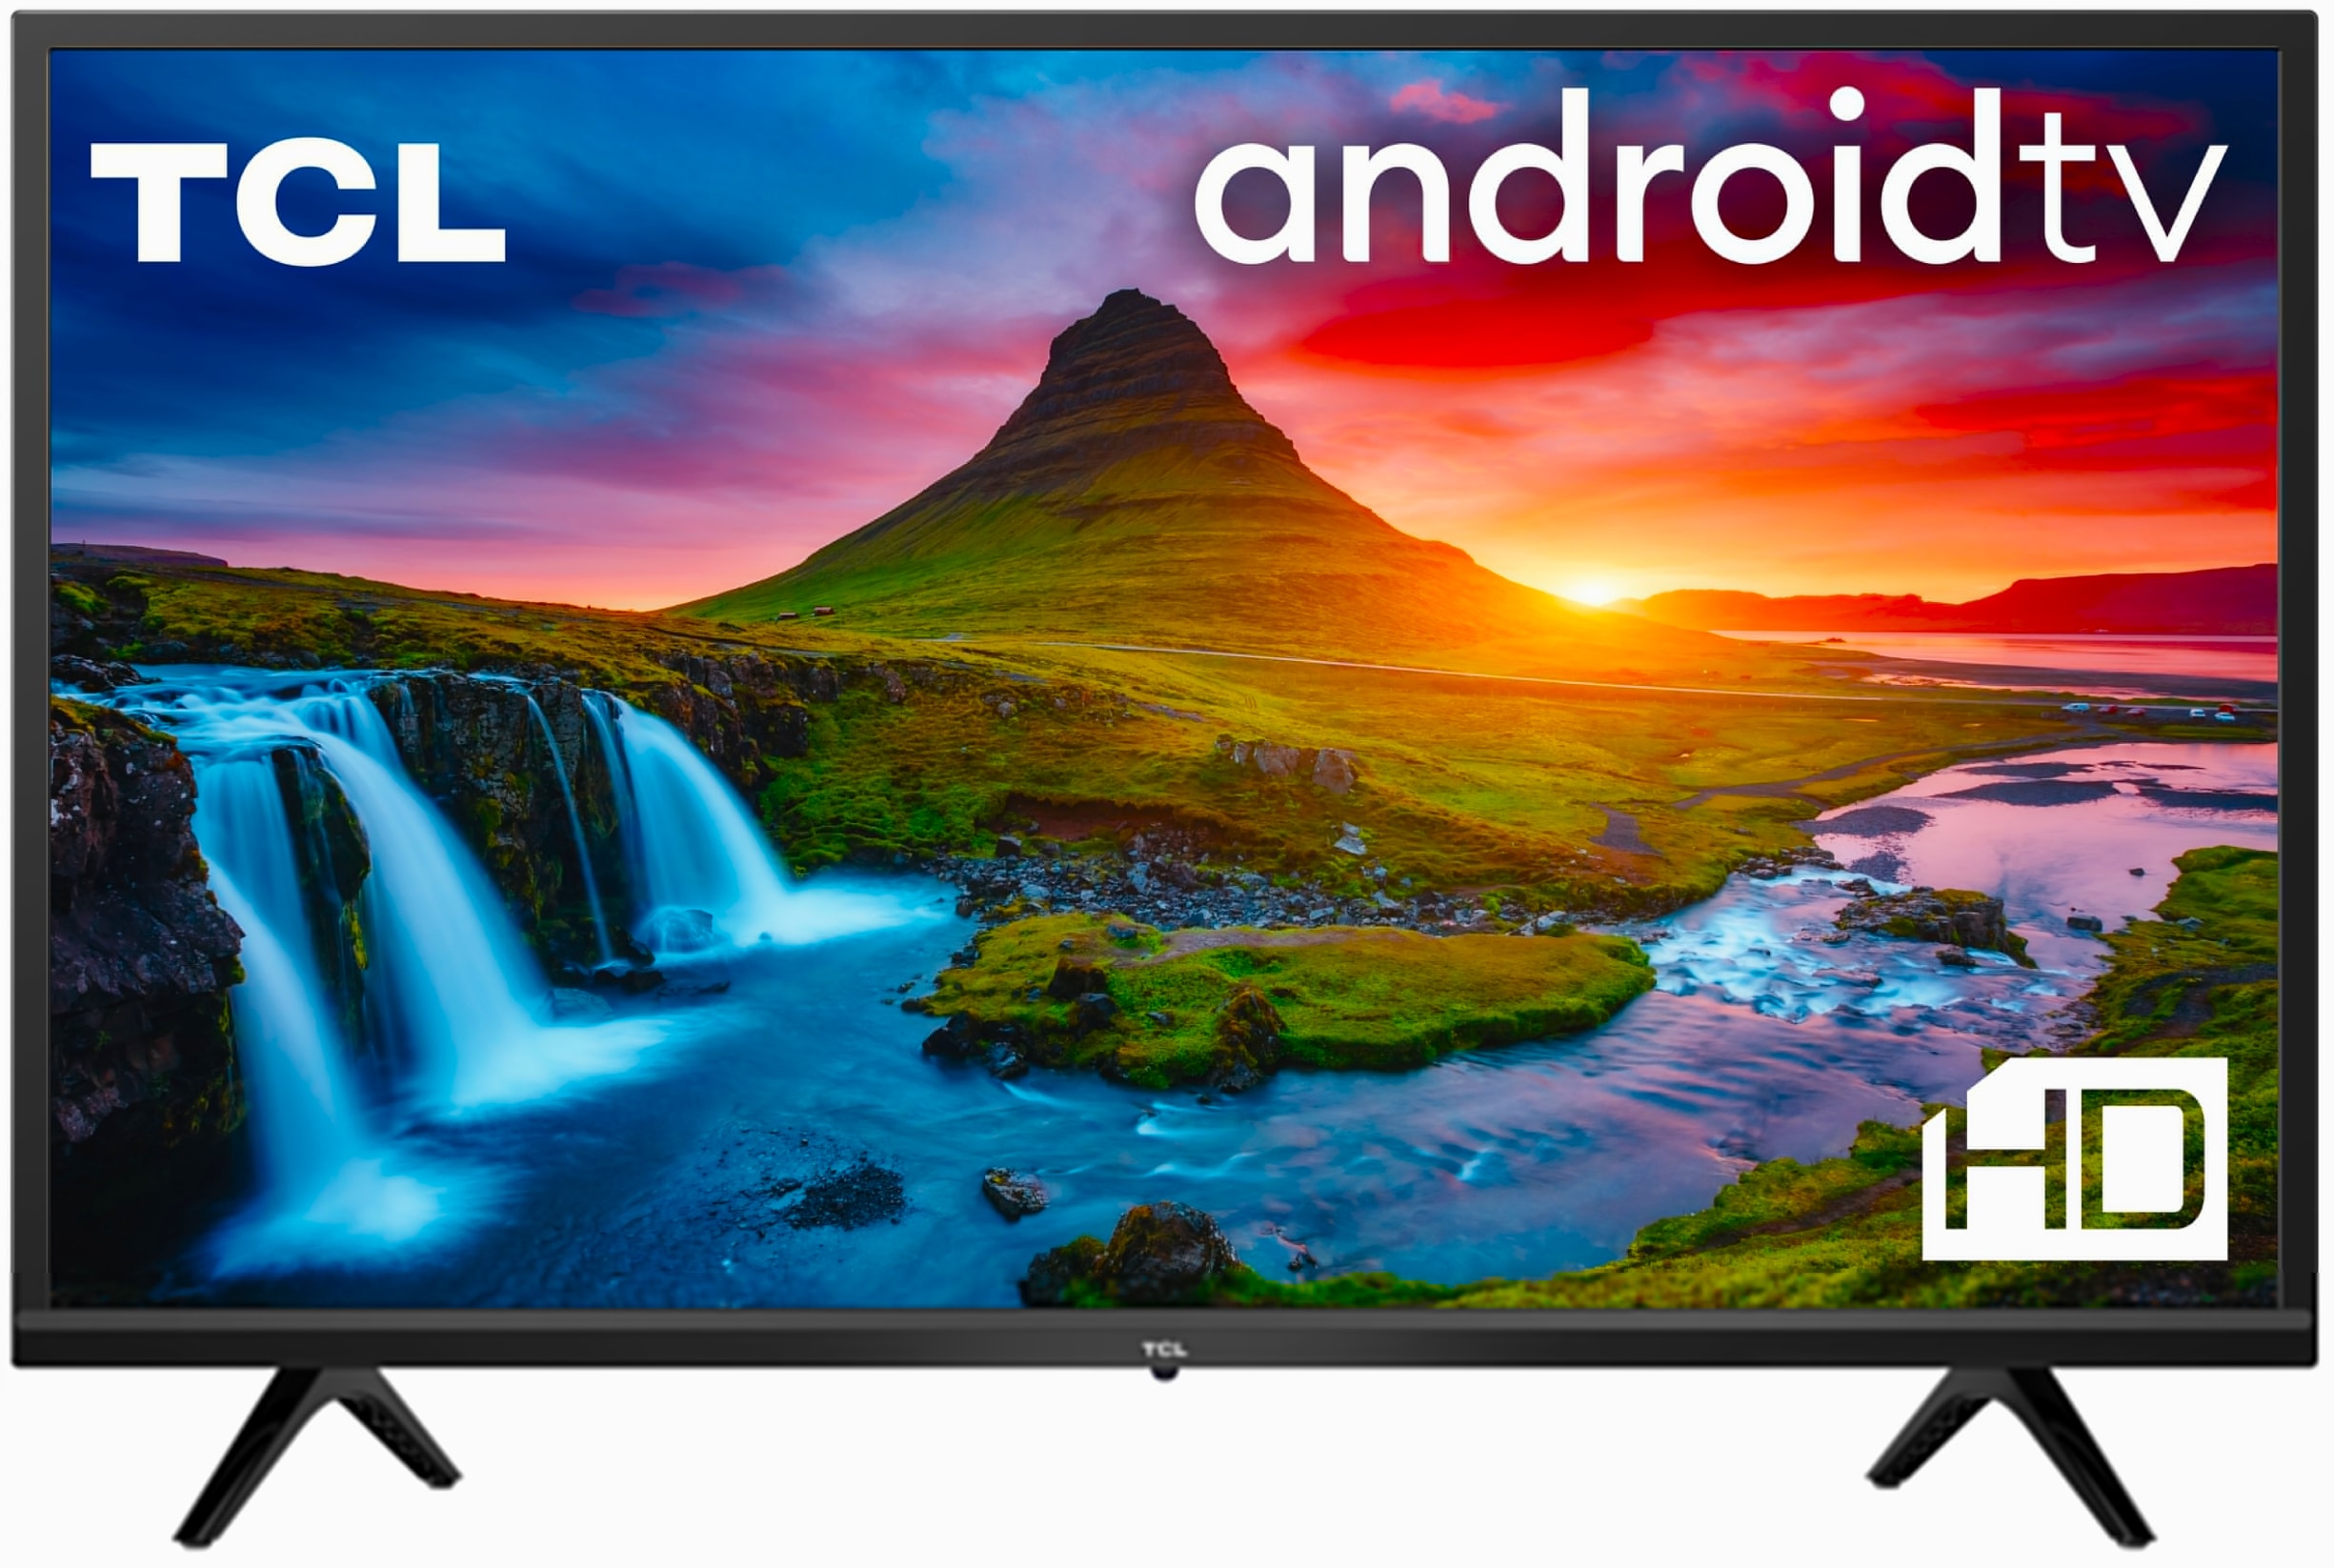 Smart Tech Tv led hd android tv 32' (80cm) 32ha20v3, hdmi/usb/bluetooth,  google assistant au meilleur prix